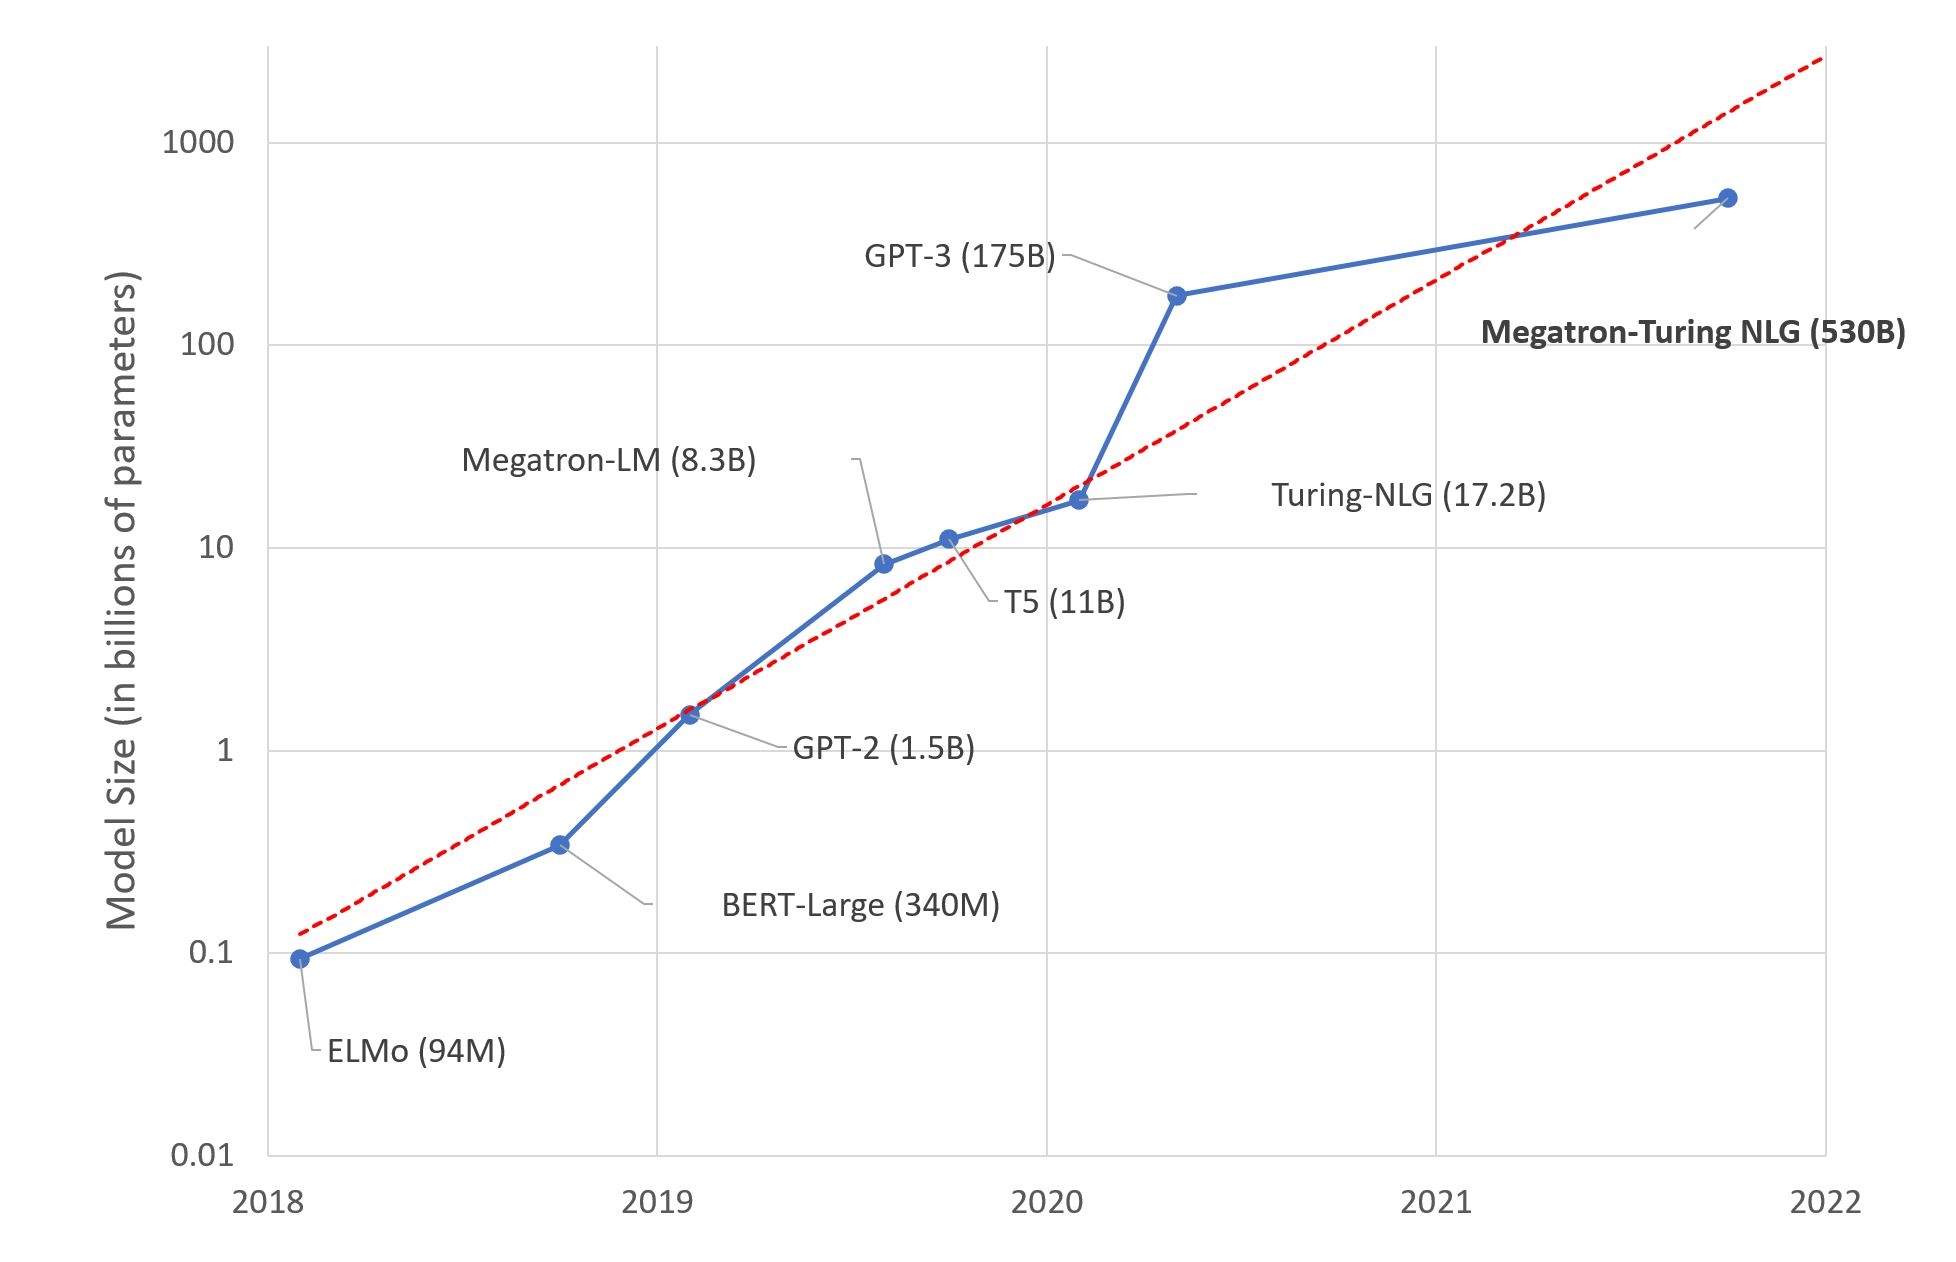 Models size (in billions of parameters) versus year